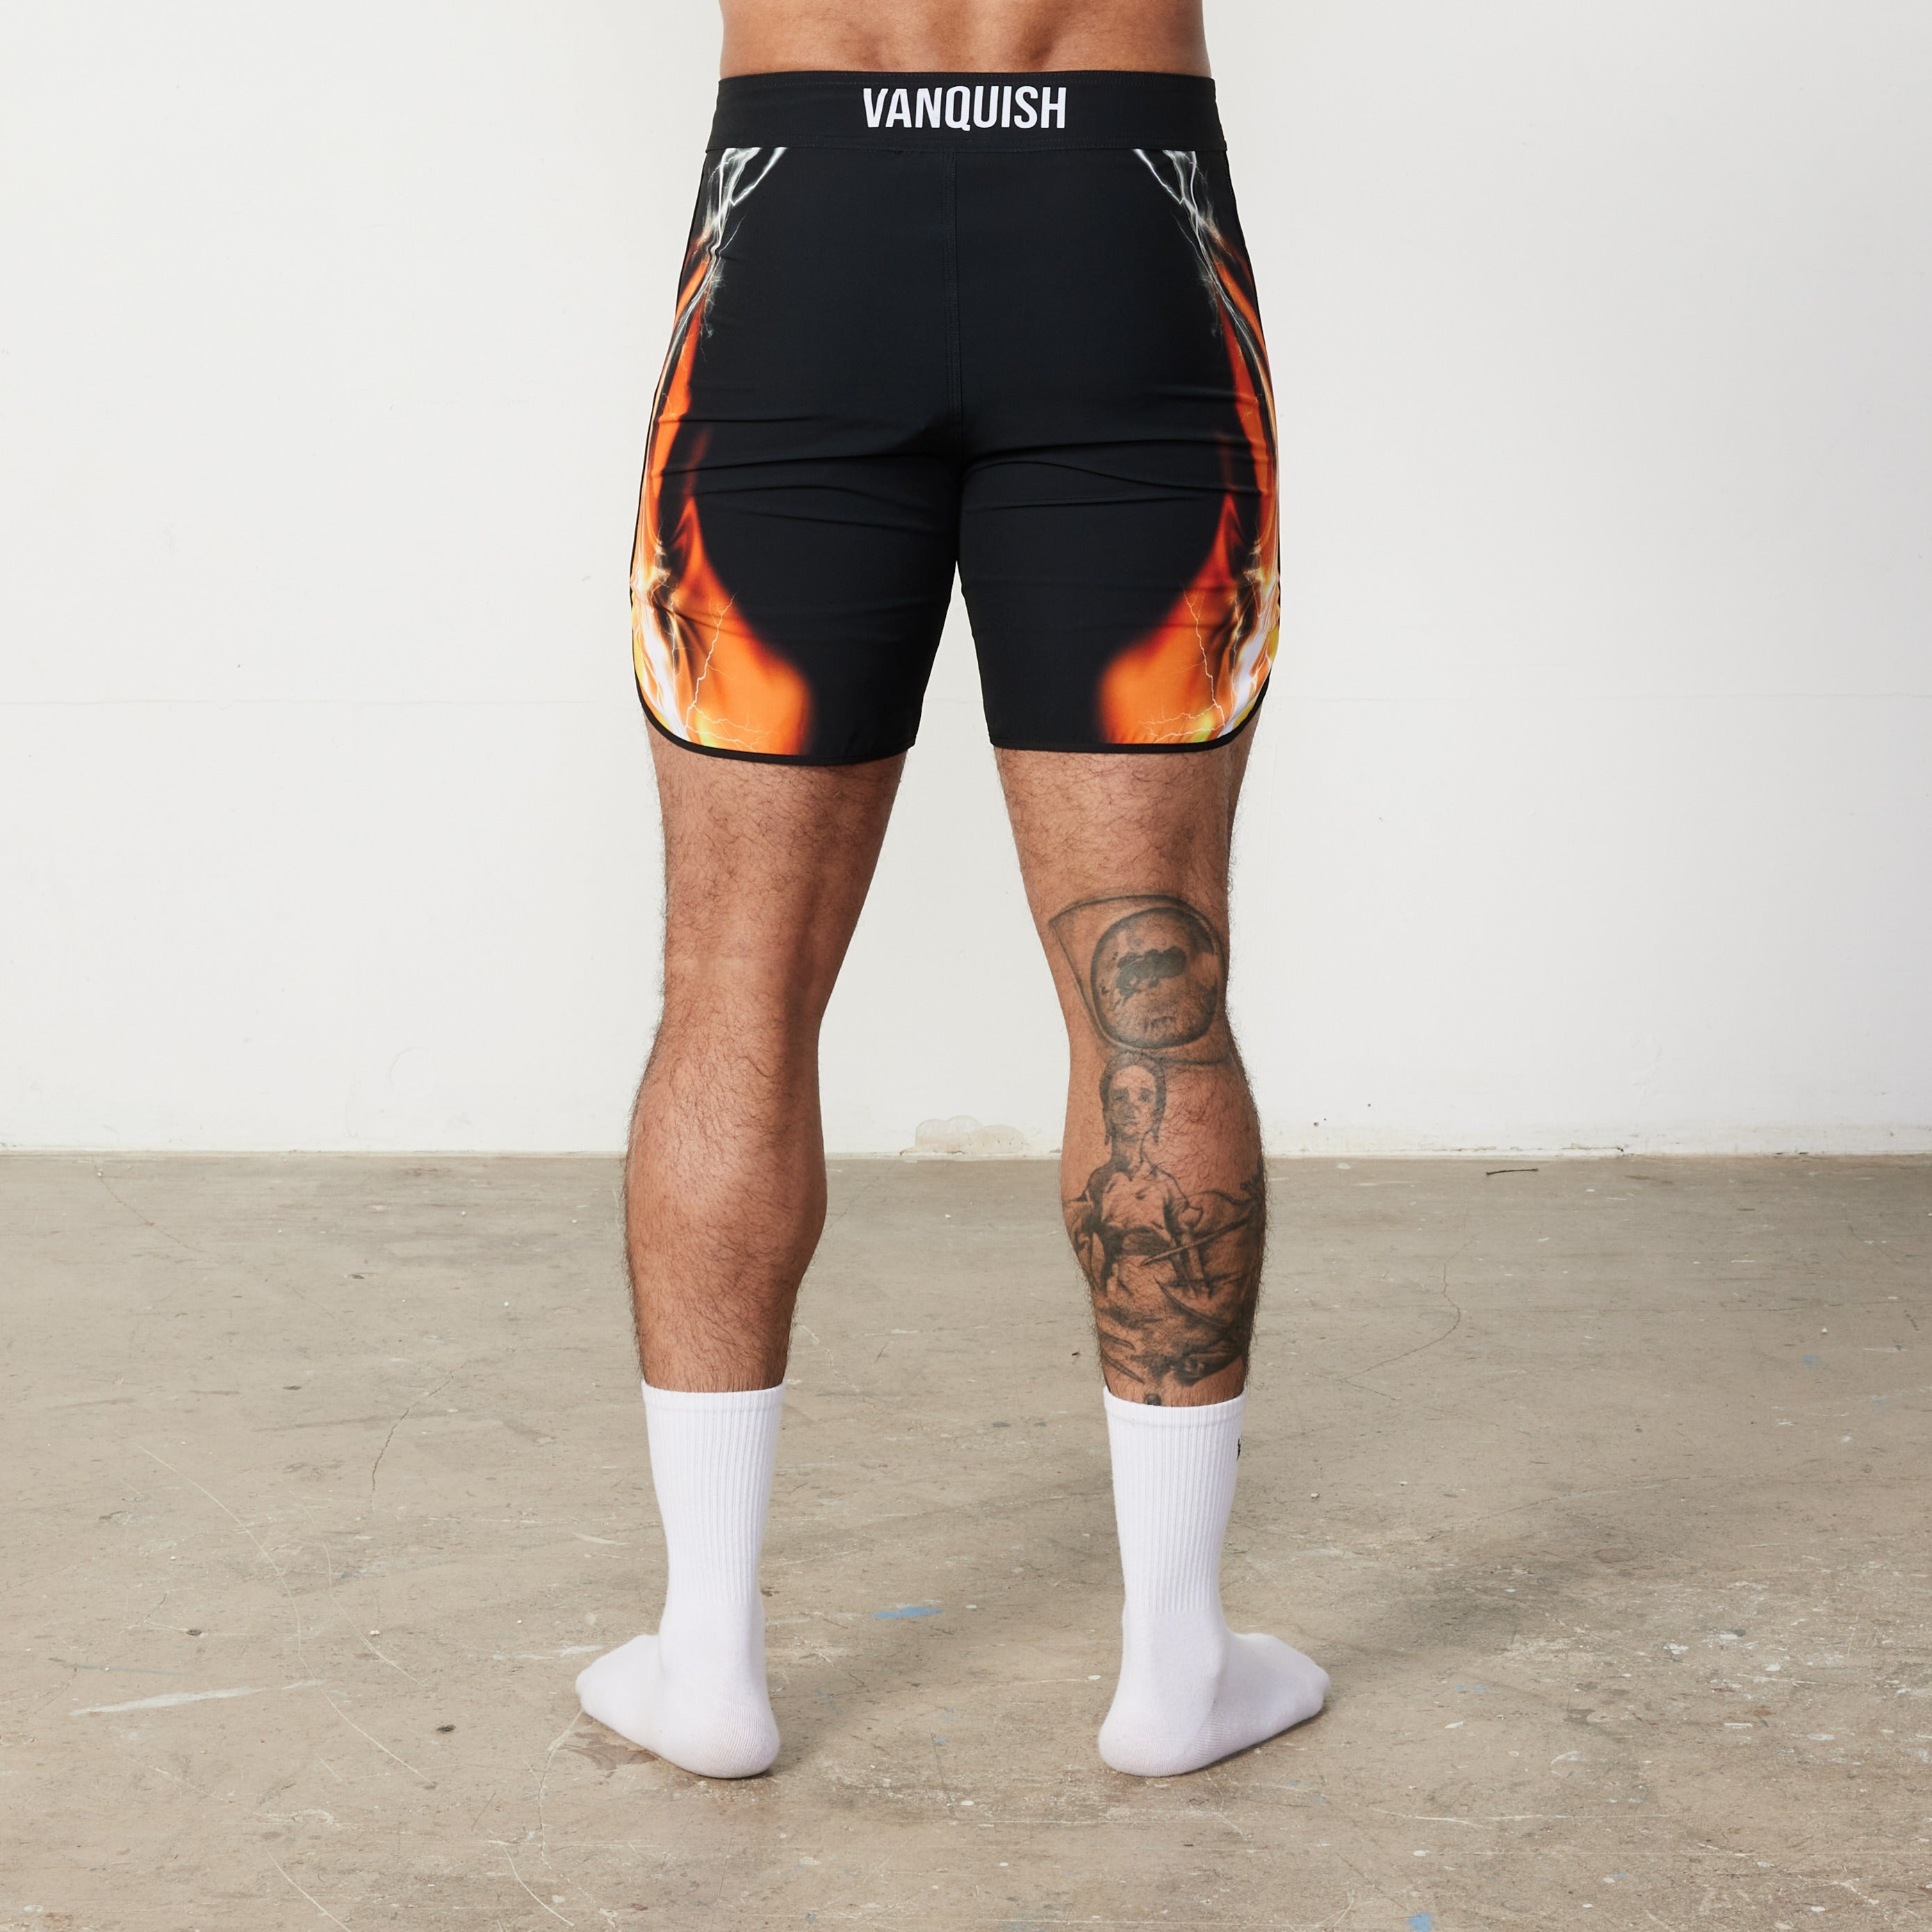 VQ Black and Orange Jeremy Buendia Men's Physique Board Shorts